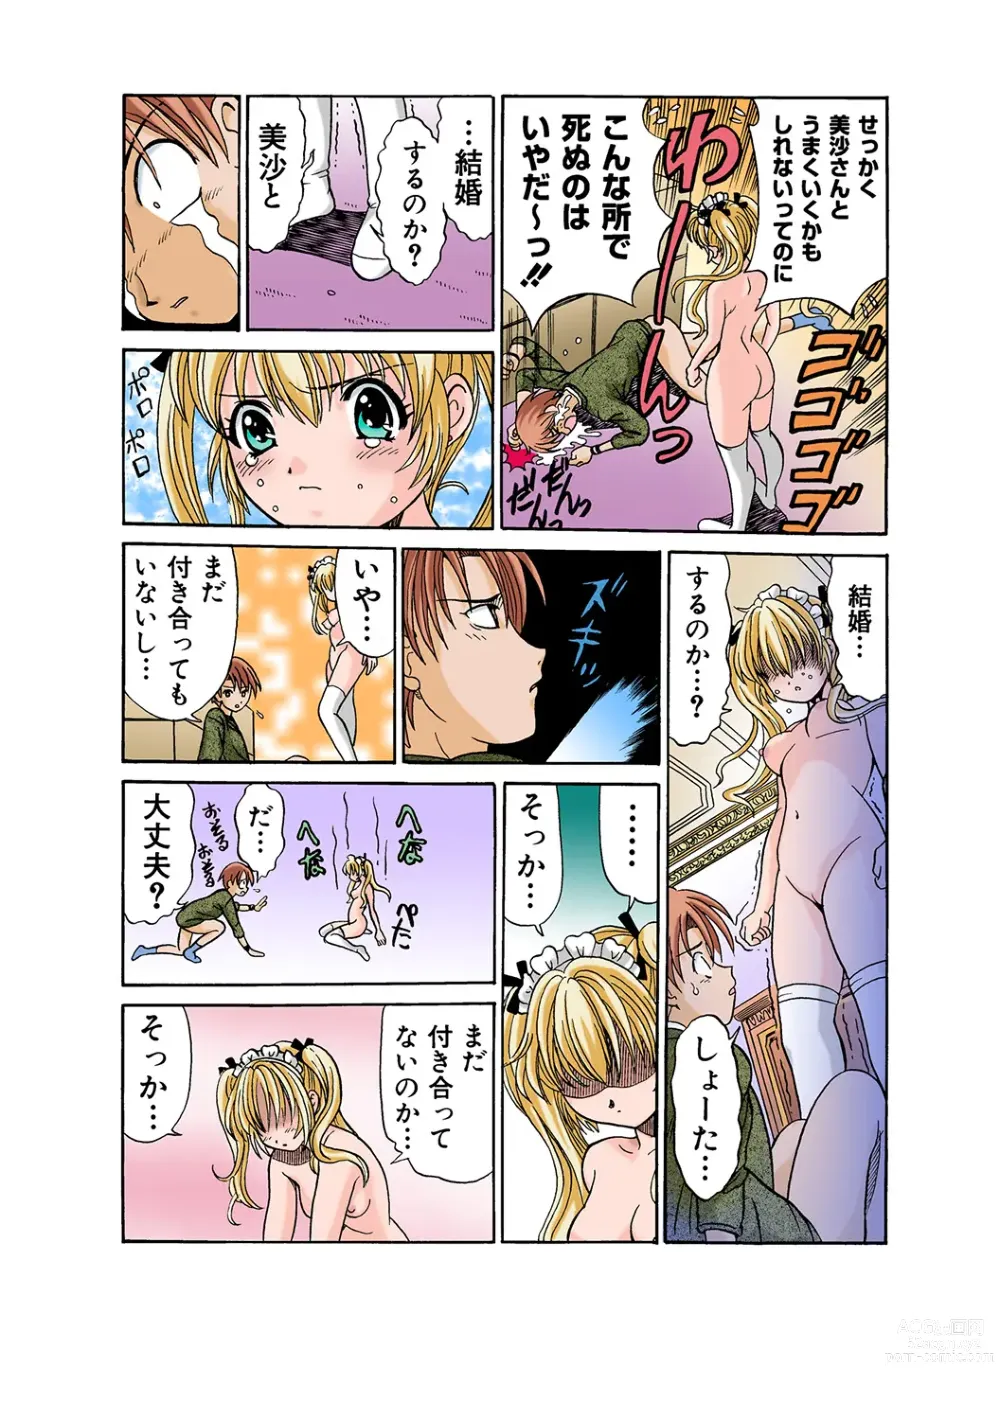 Page 116 of manga HiME-Mania Vol. 44